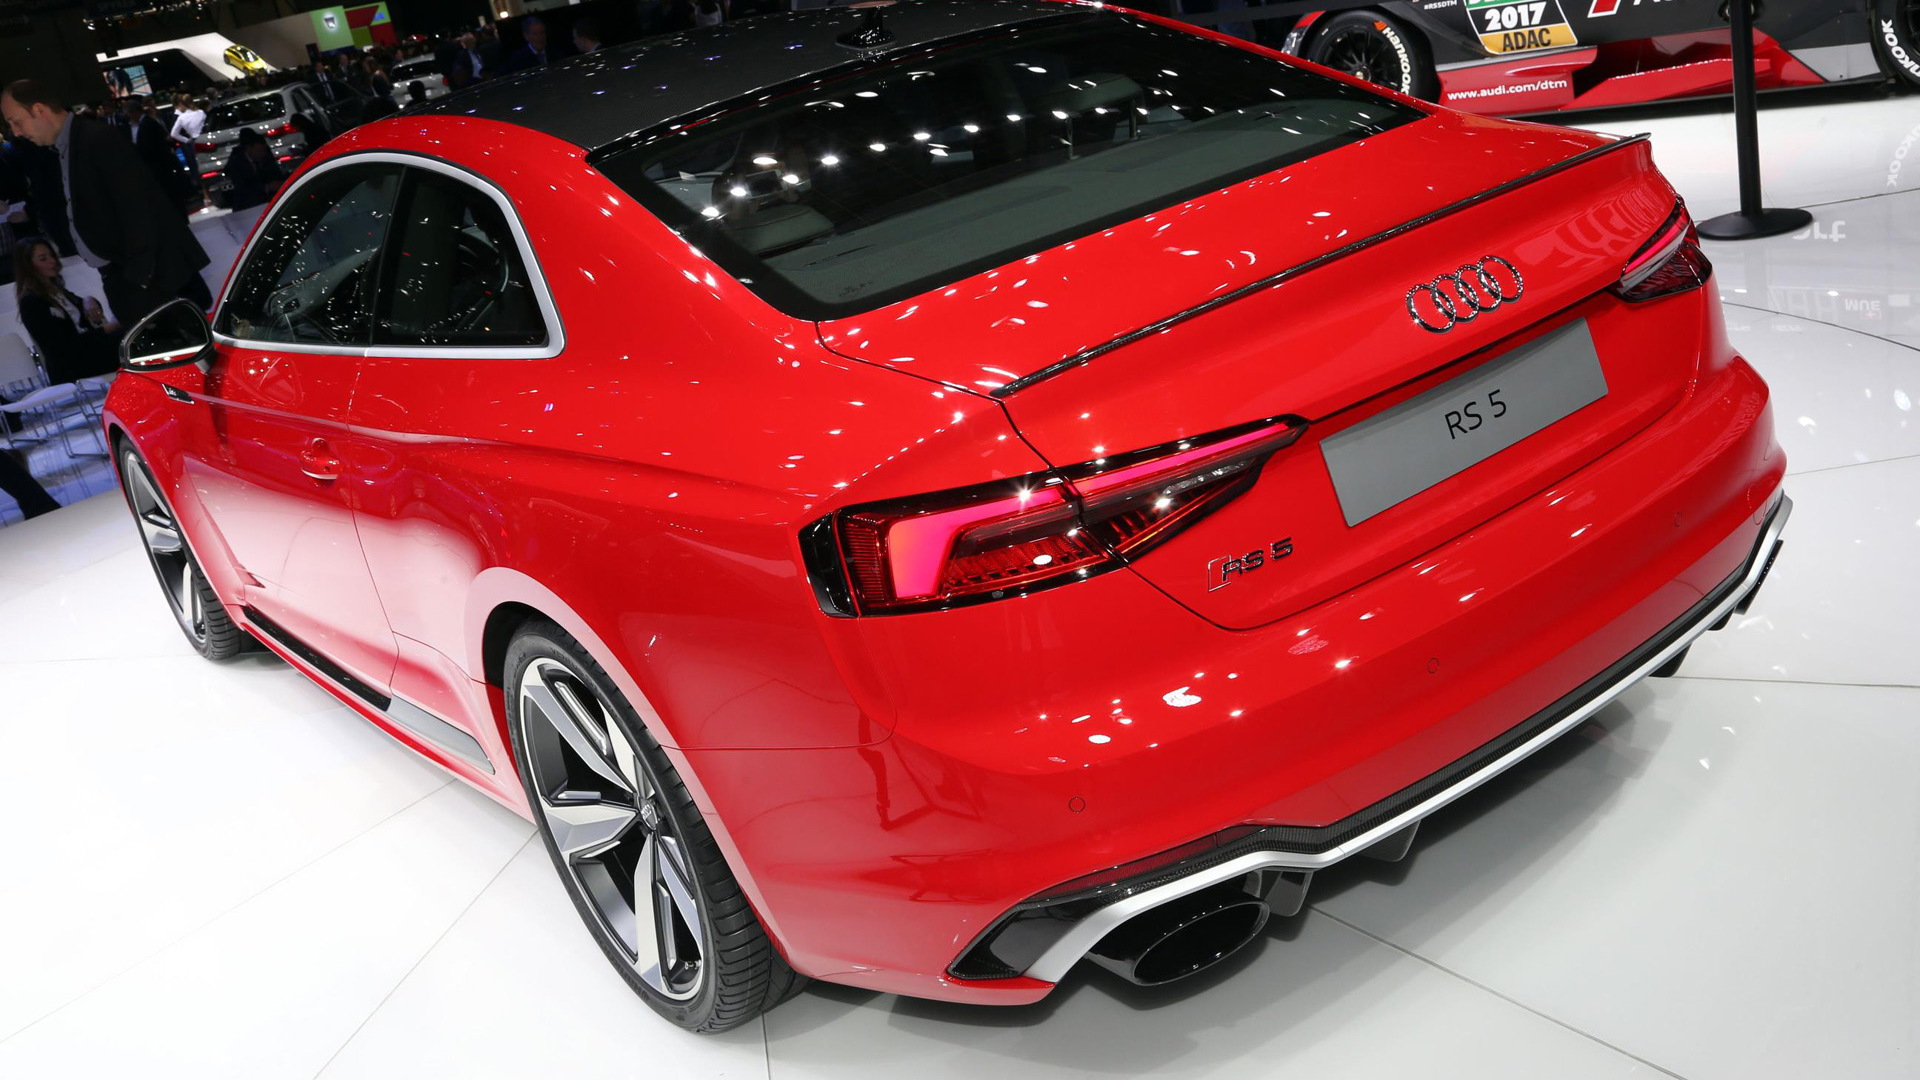 Audi RS 5, 2017 Geneva auto show